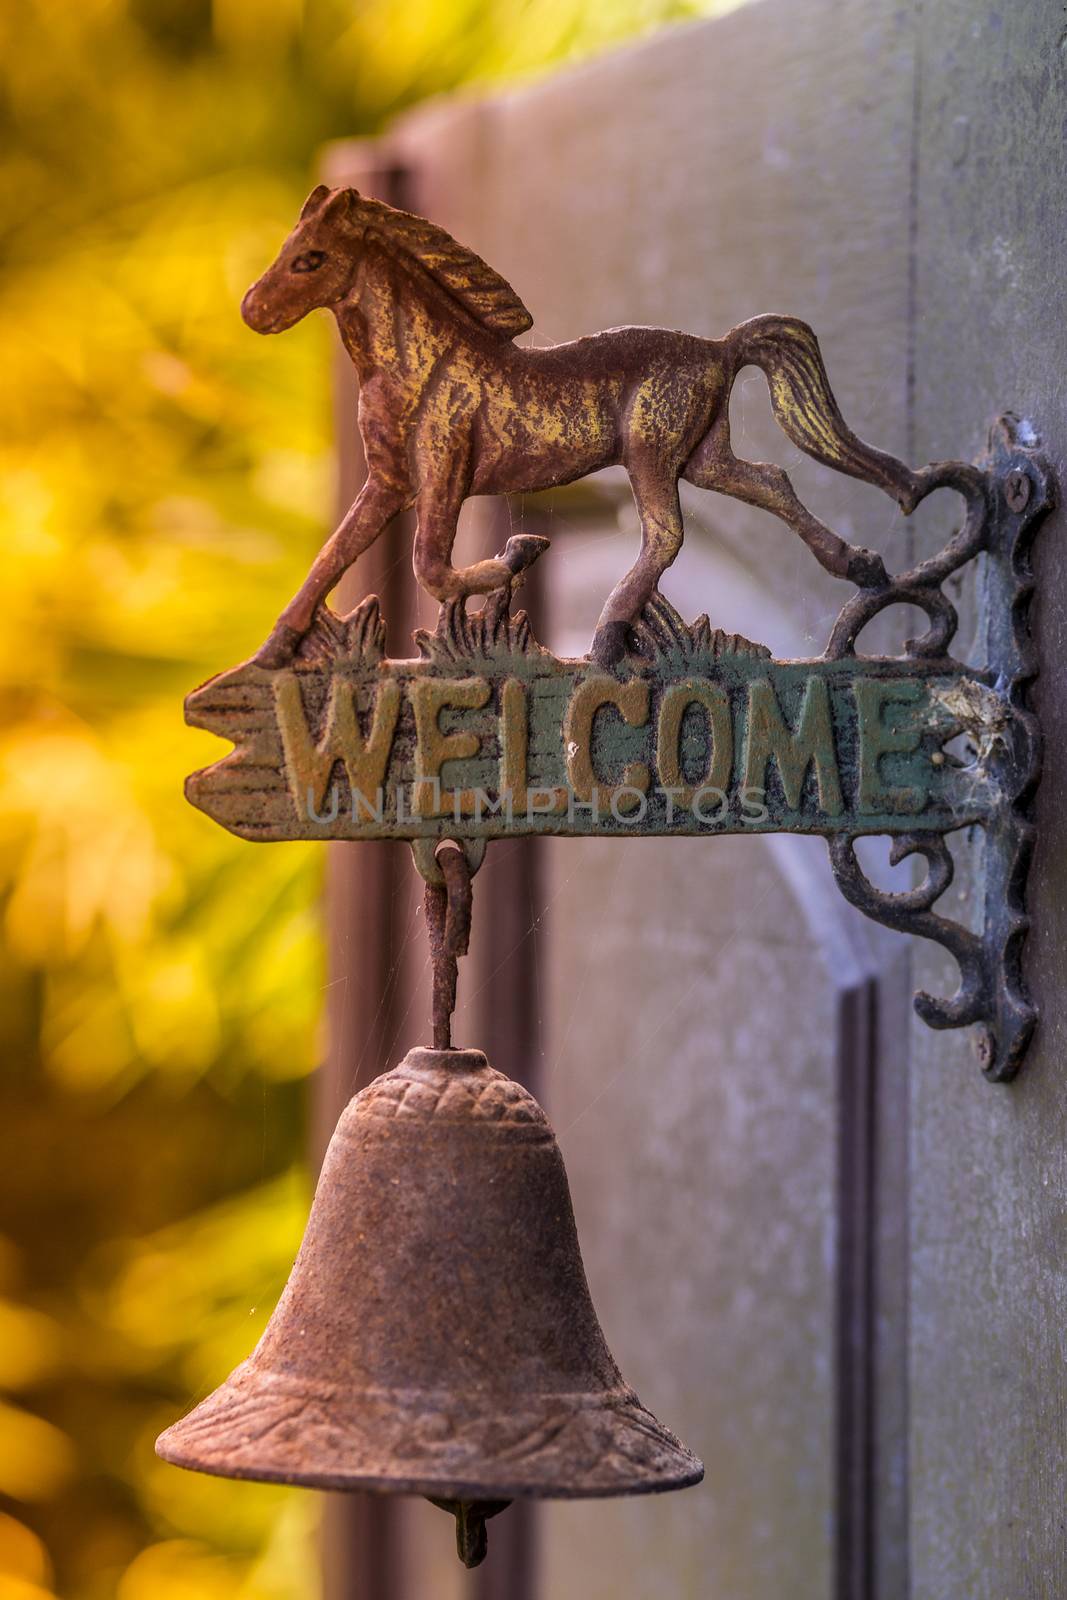 Metal sign welcome on the door with horse sculpture.